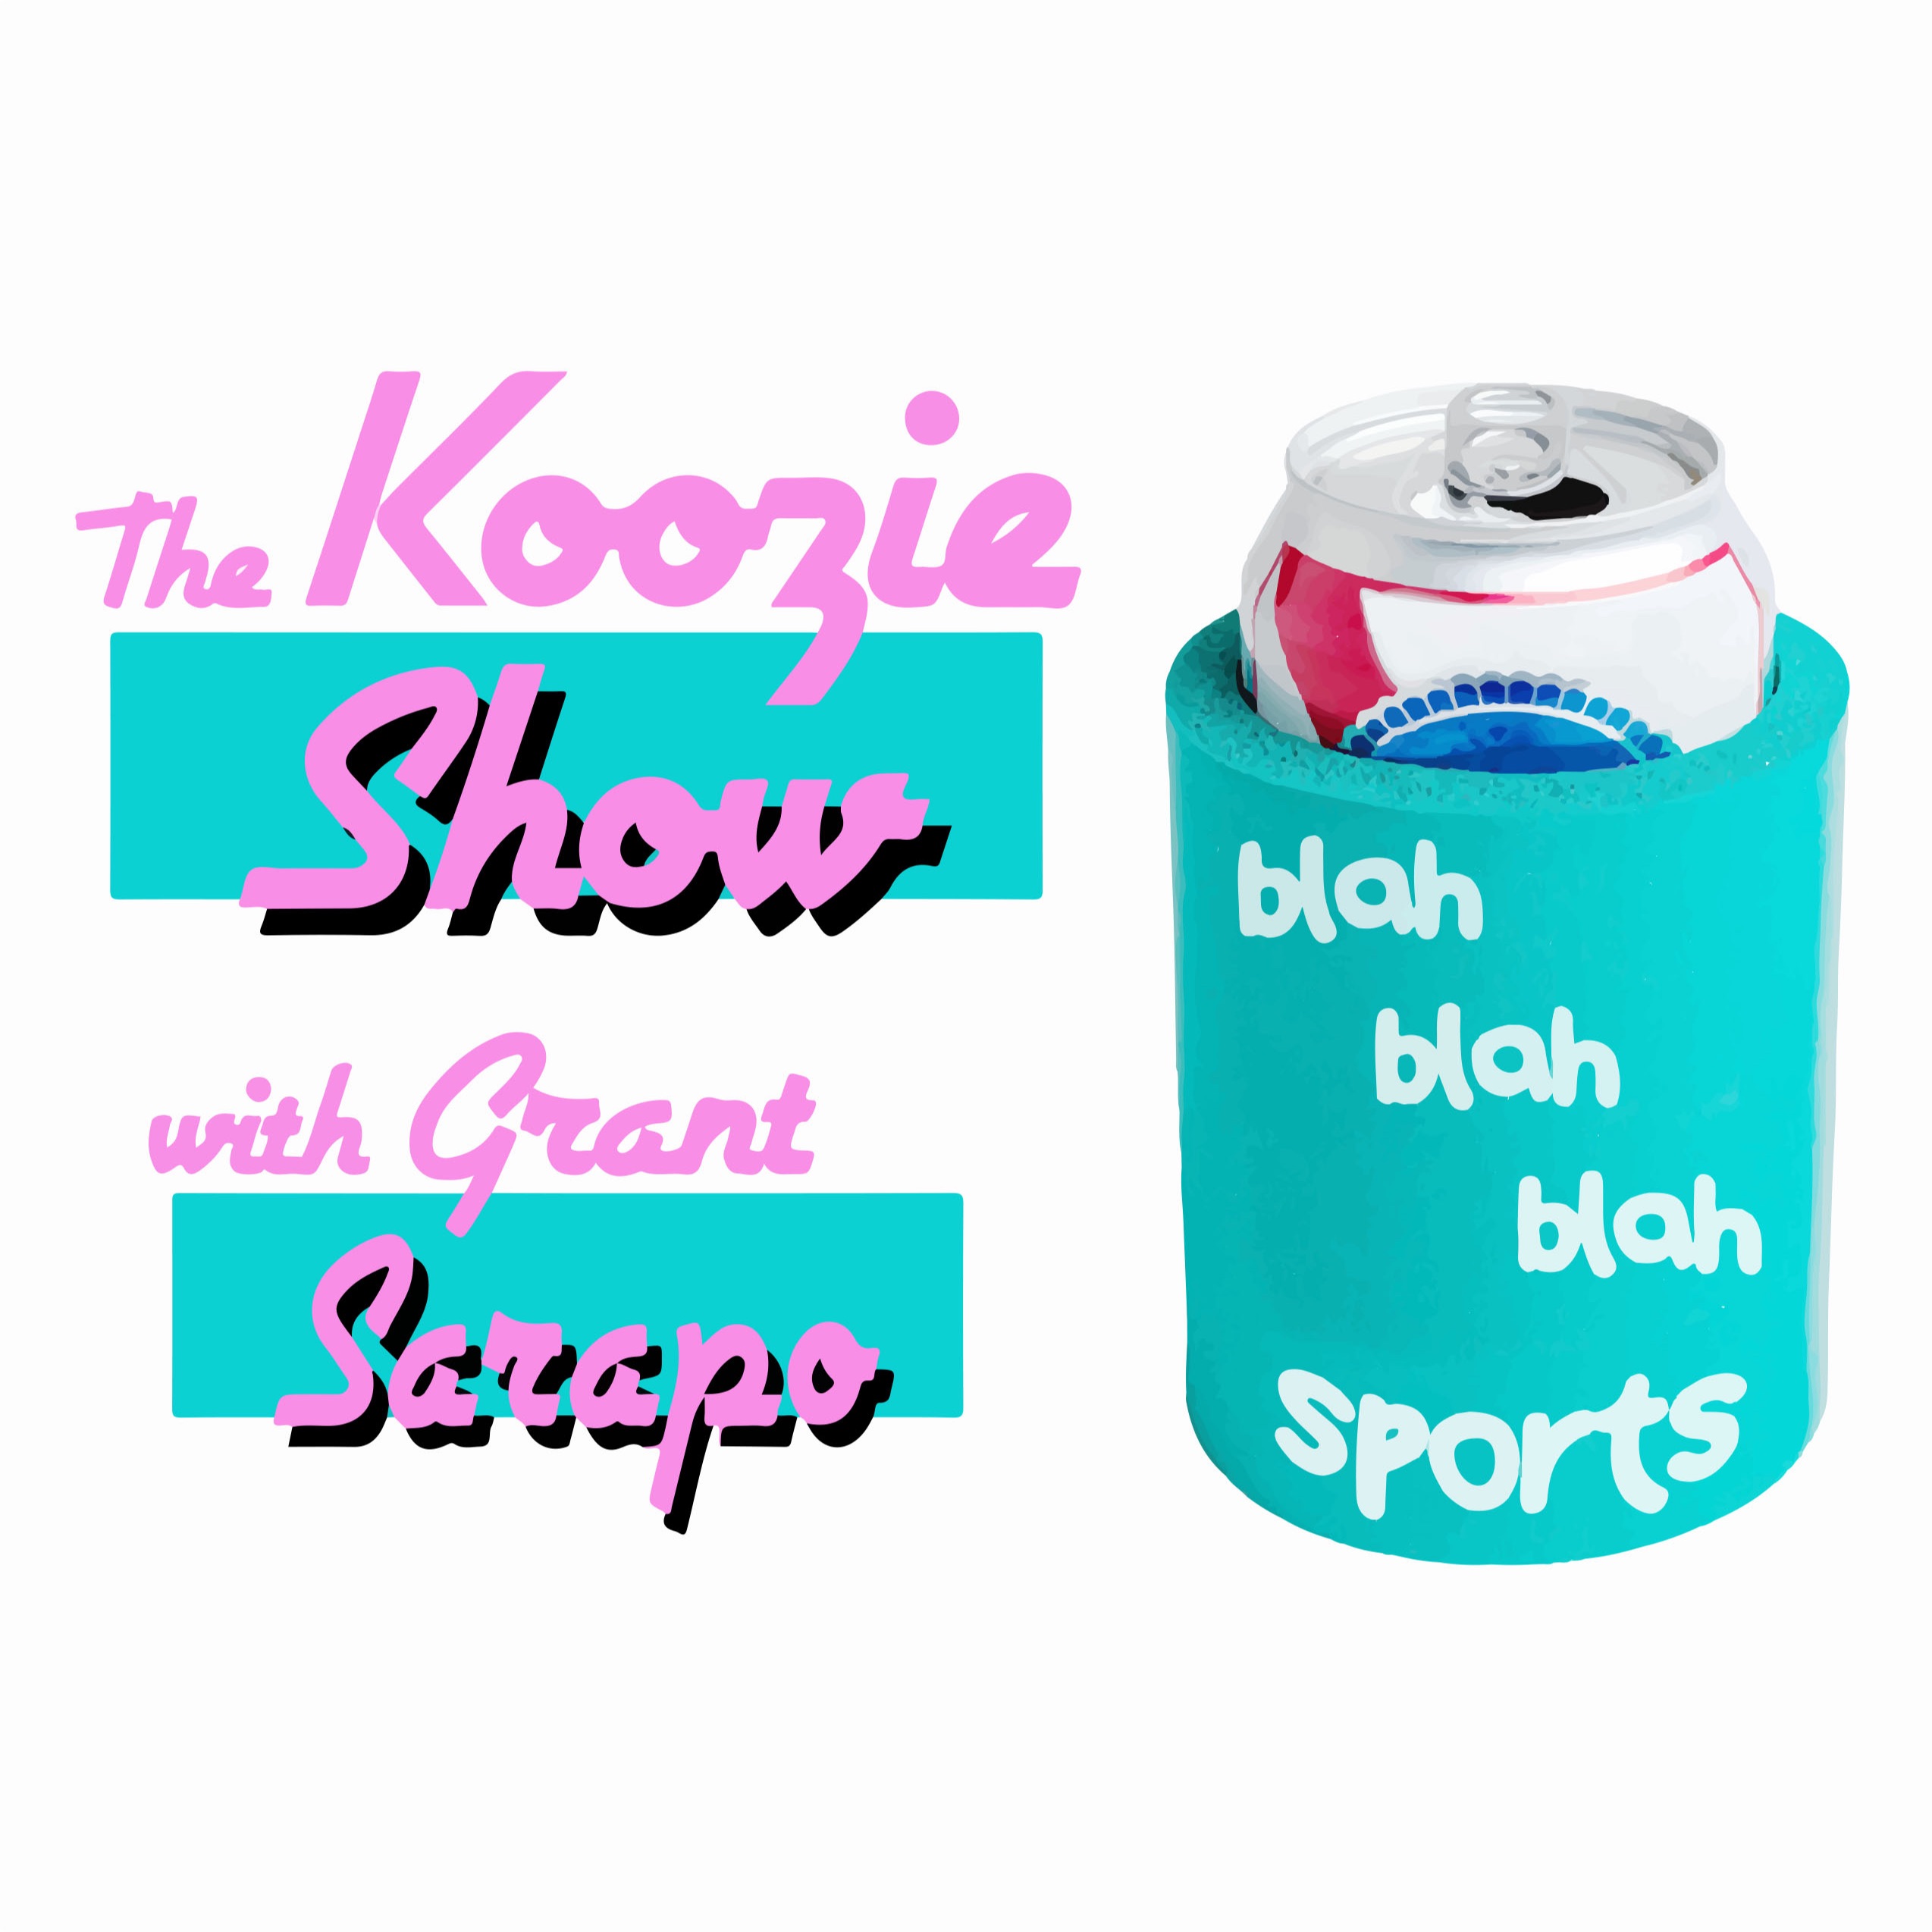 The Koozie Show